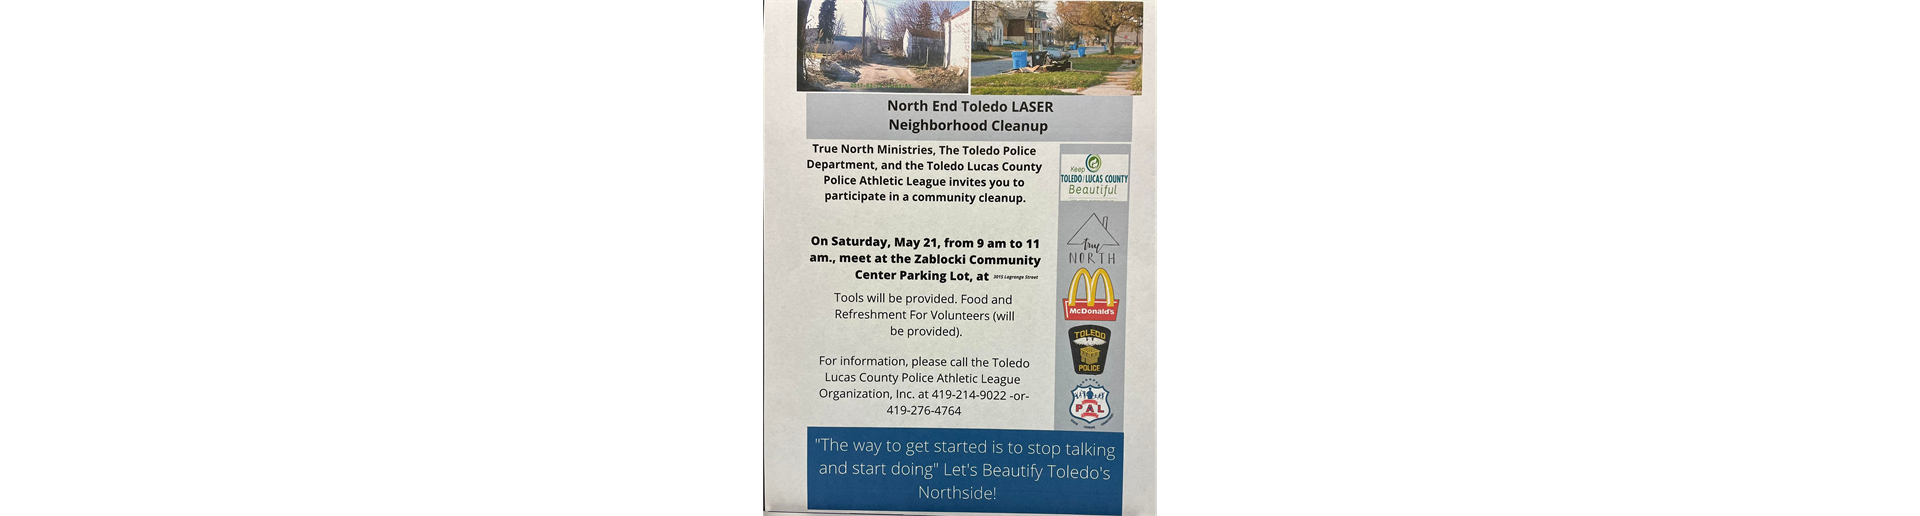 Northend Toledo LASER Neighborhood Cleanup 5/21